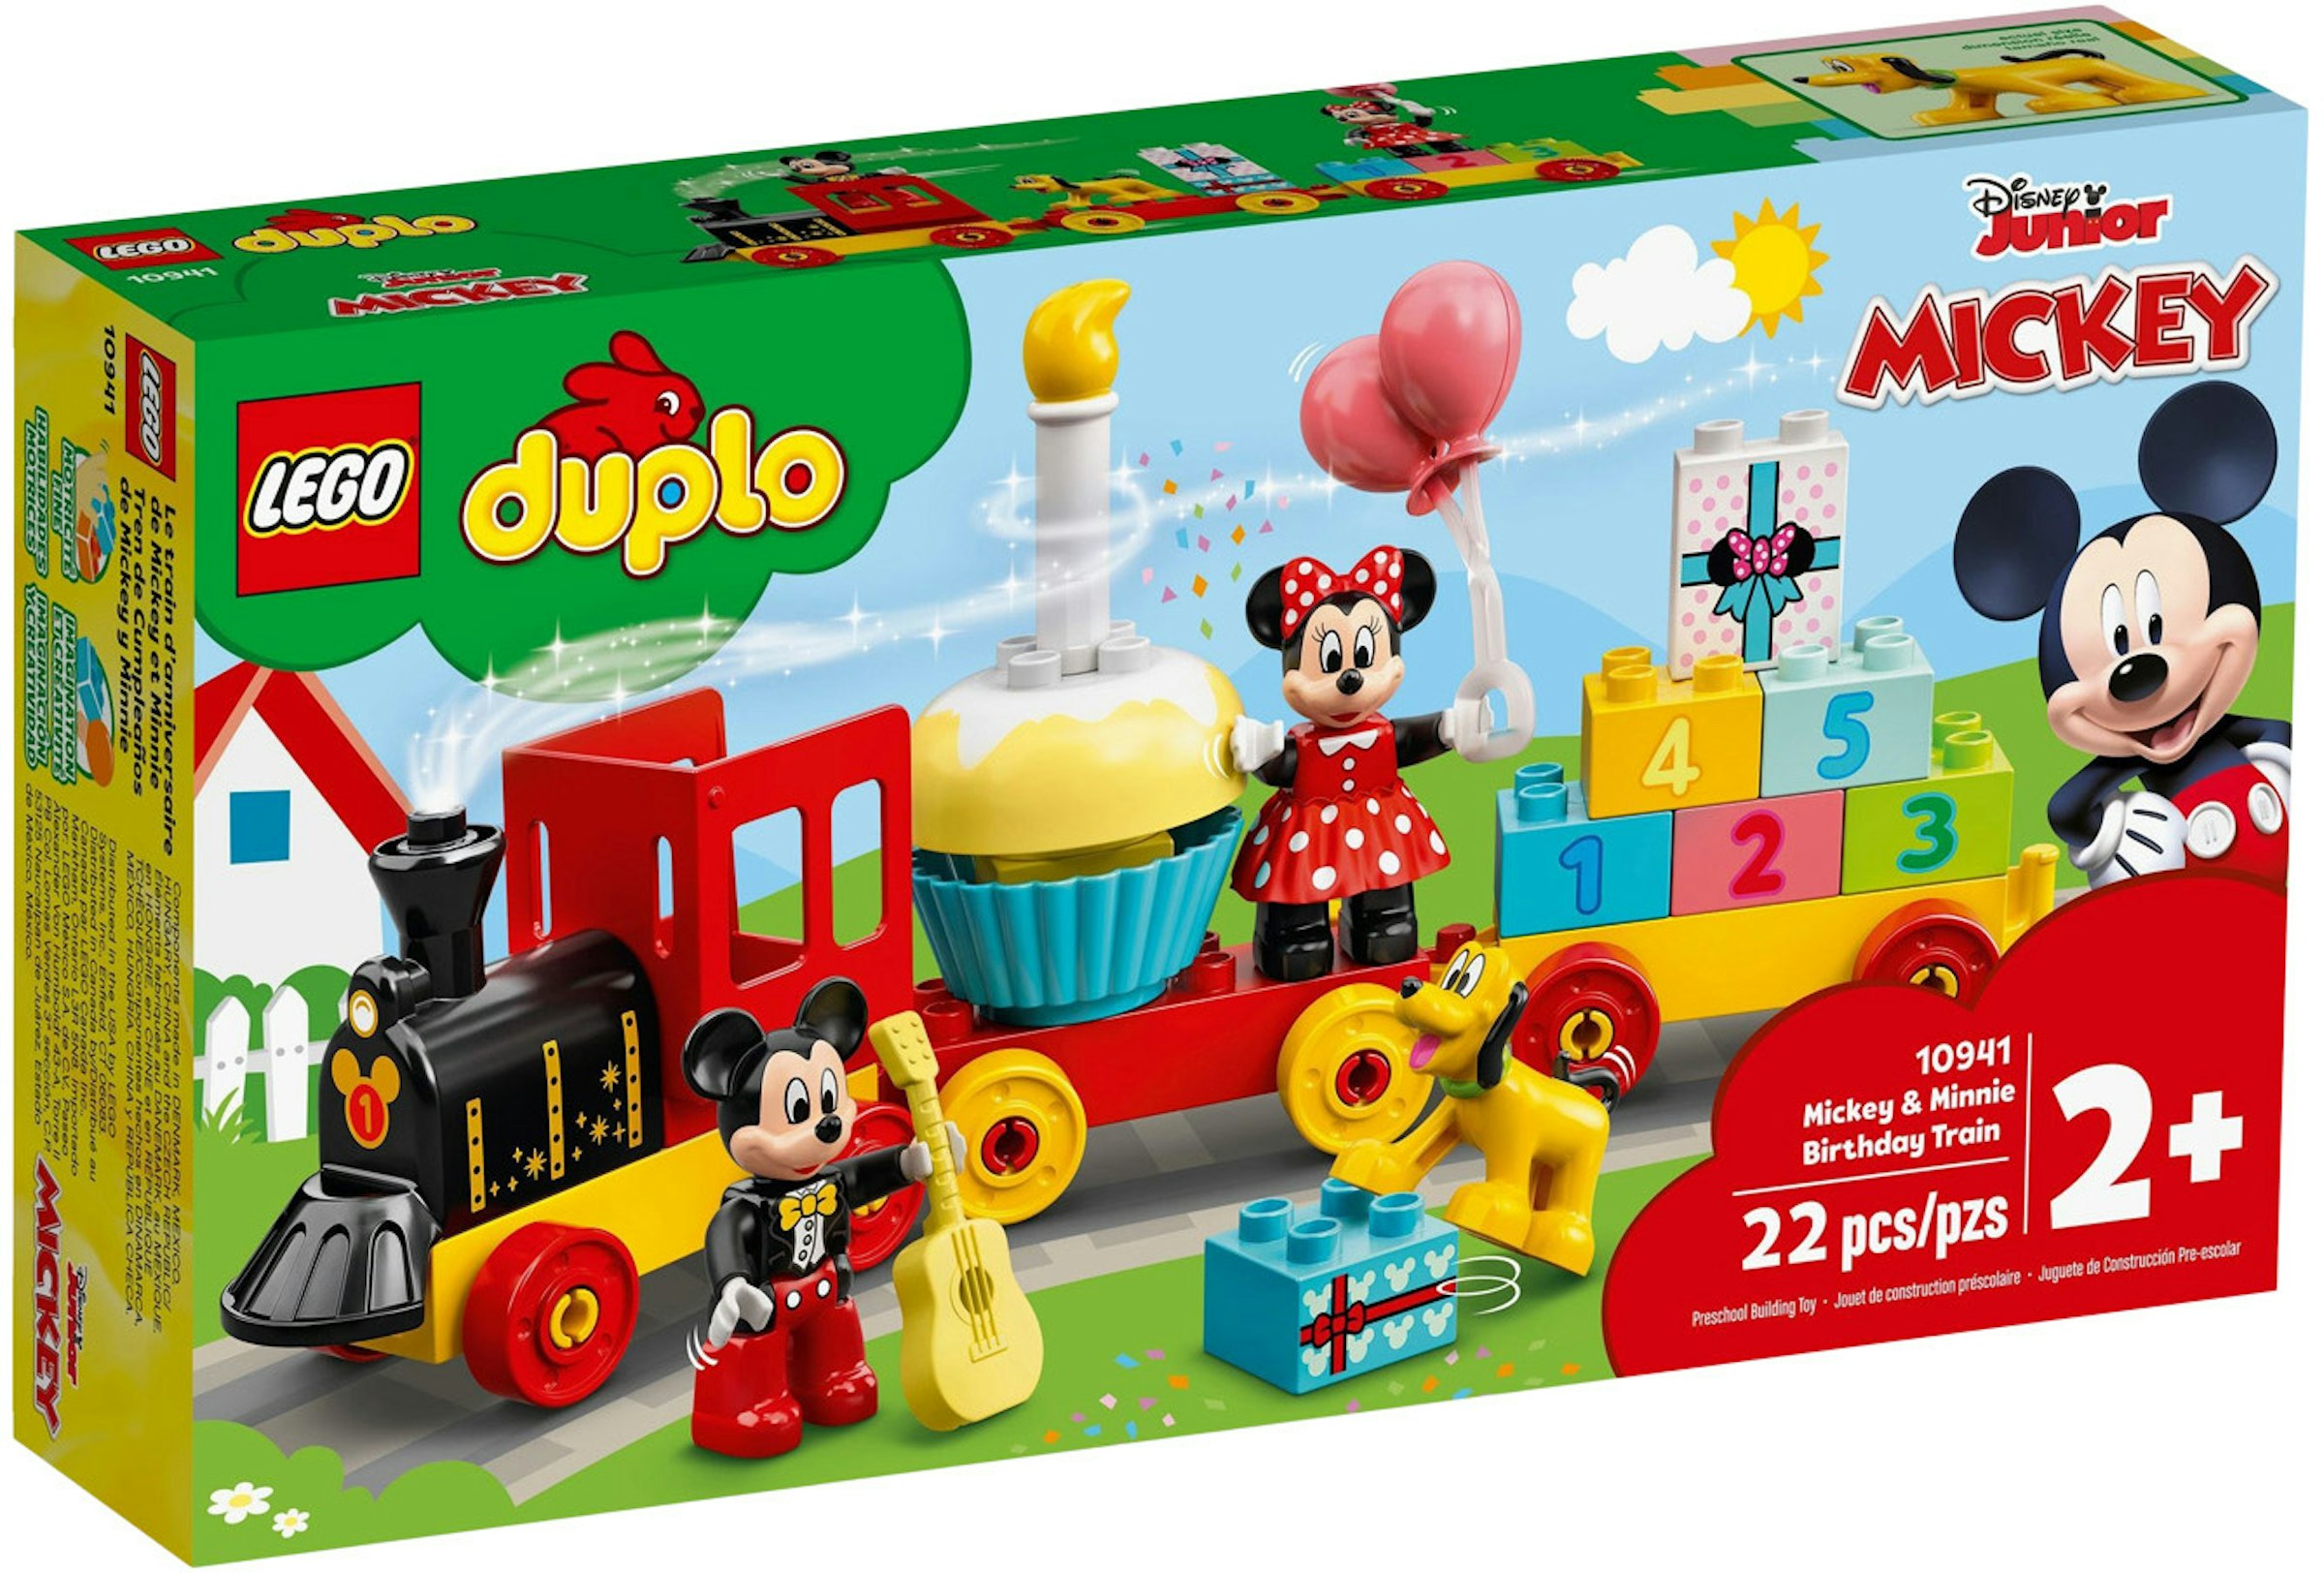 LEGO Duplo Mickey Minnie Birthday Train Set 10941 - US